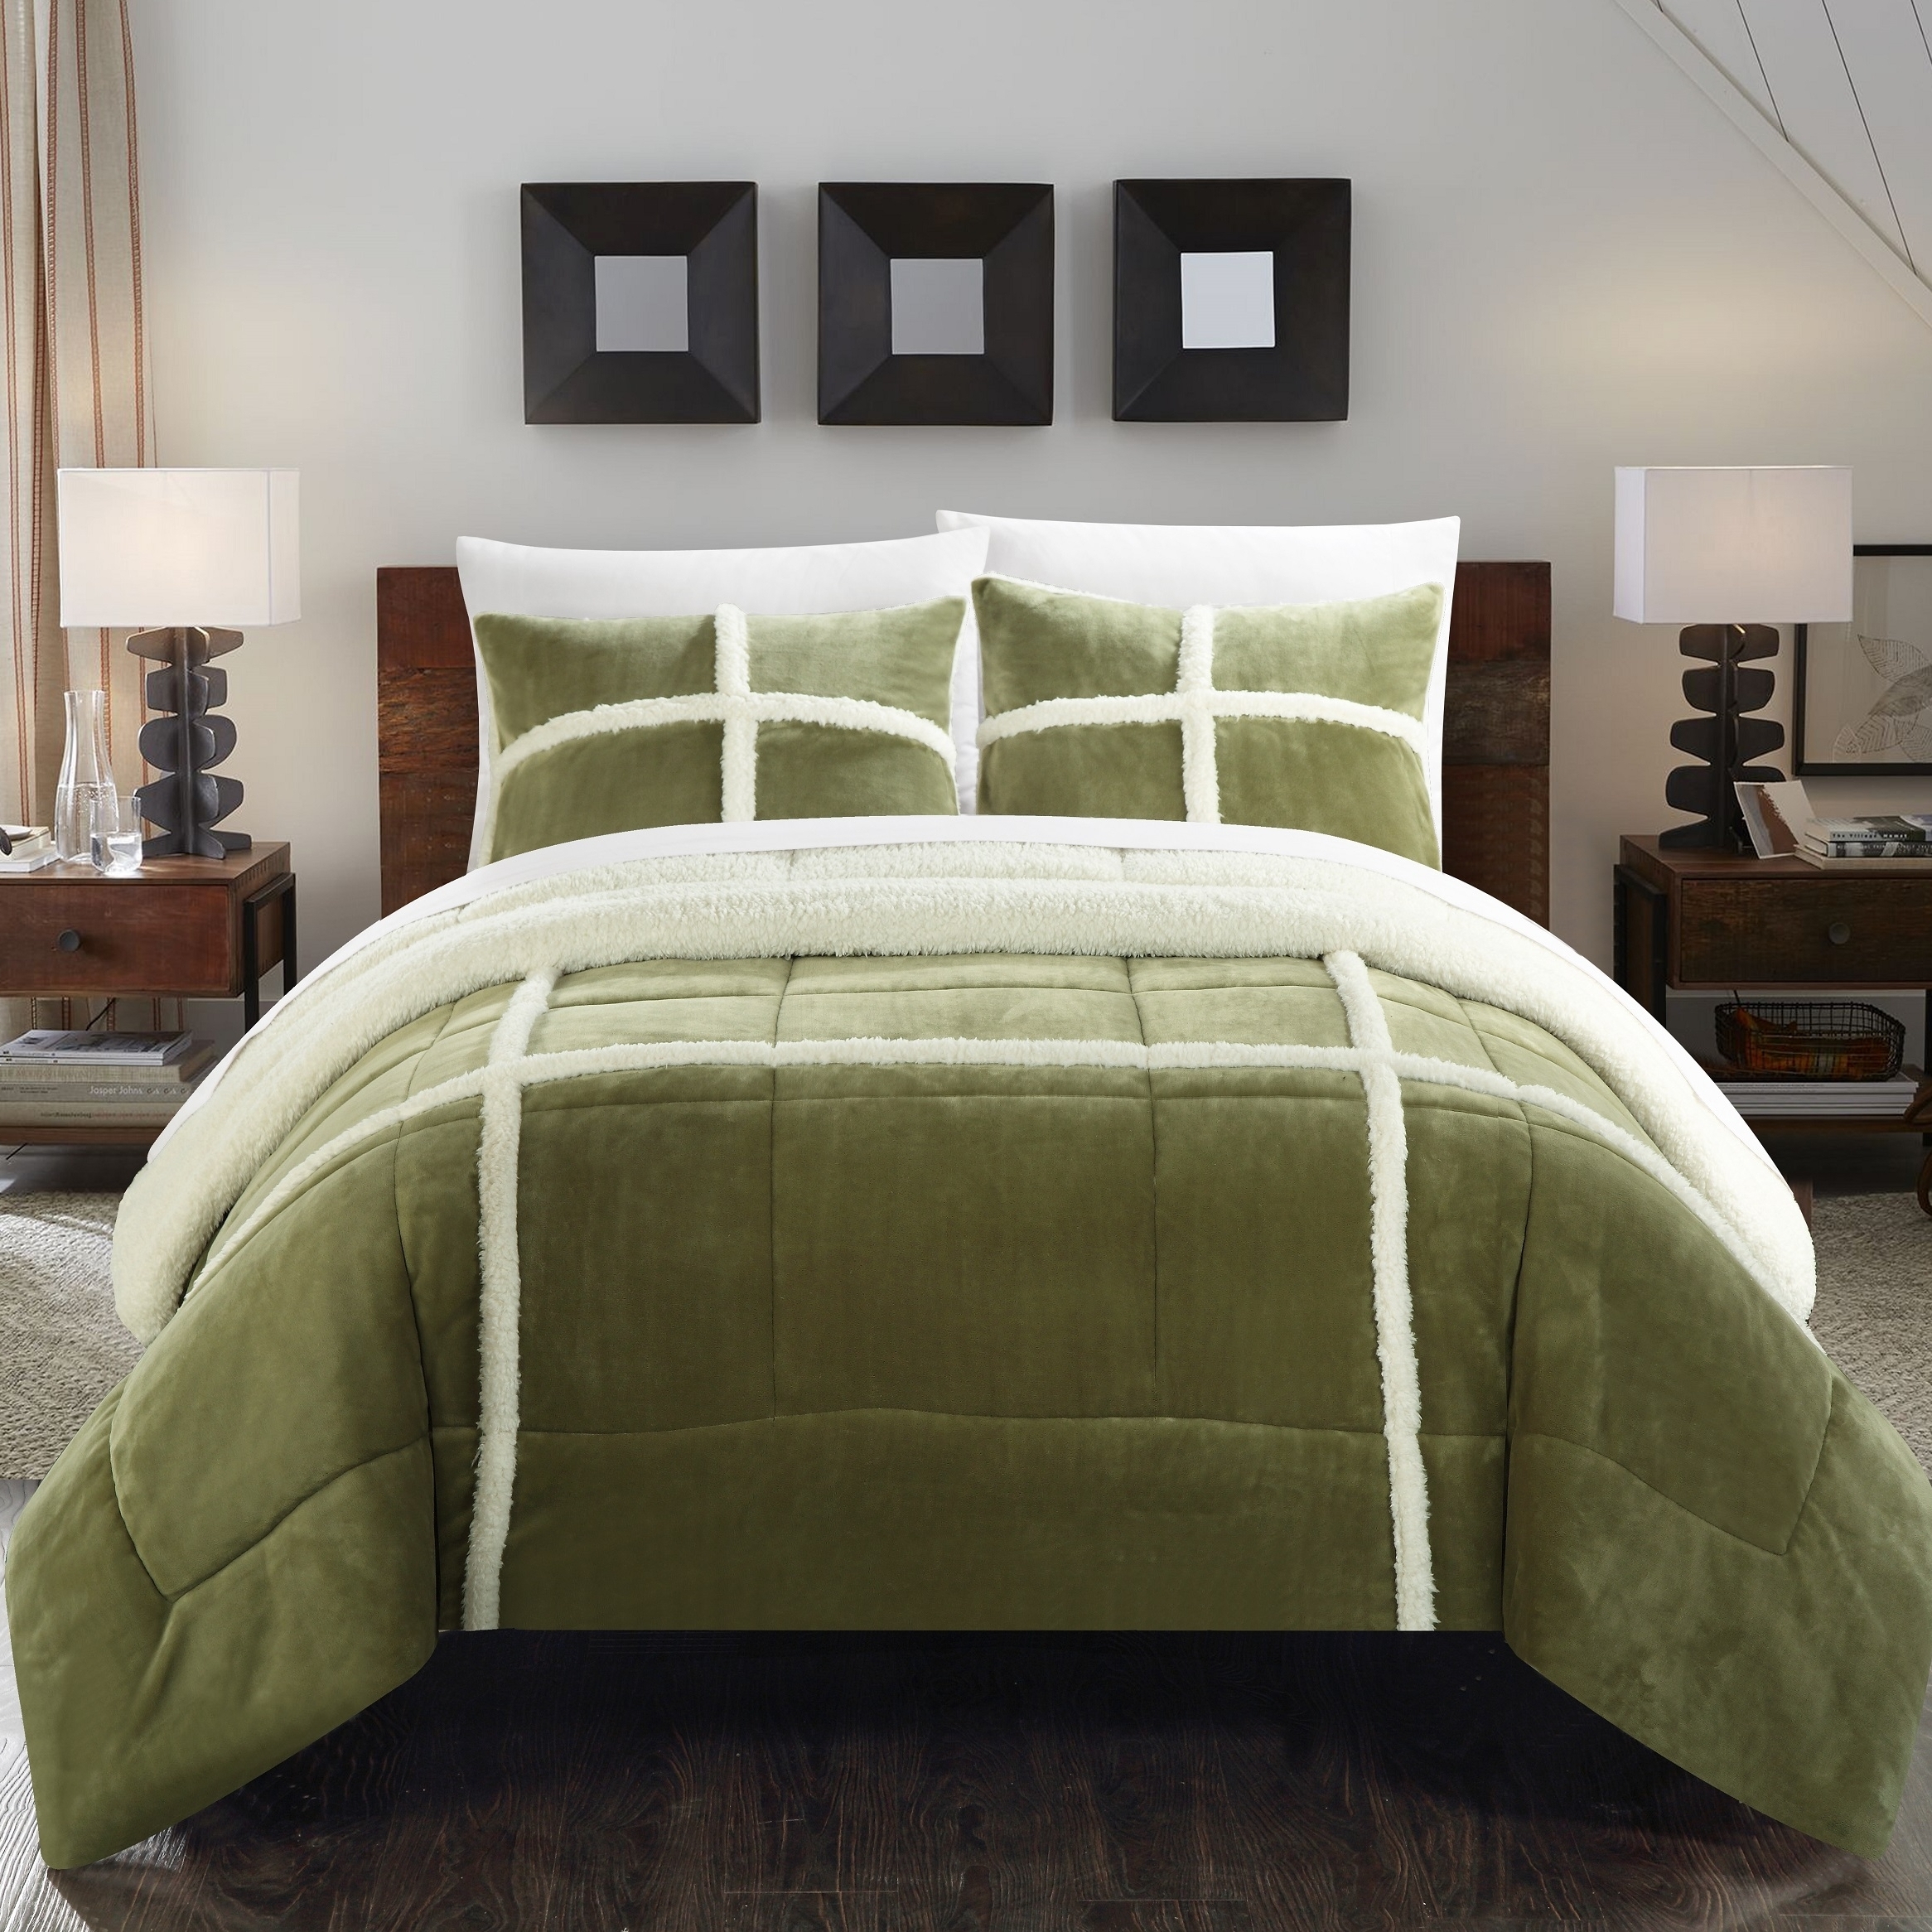 Chloe 3 Or 2 Piece Comforter Set Ultra Plush Micro Mink Sherpa Lined Bedding â Decorative Pillow Shams Included - Green, Queen - 3 Piece